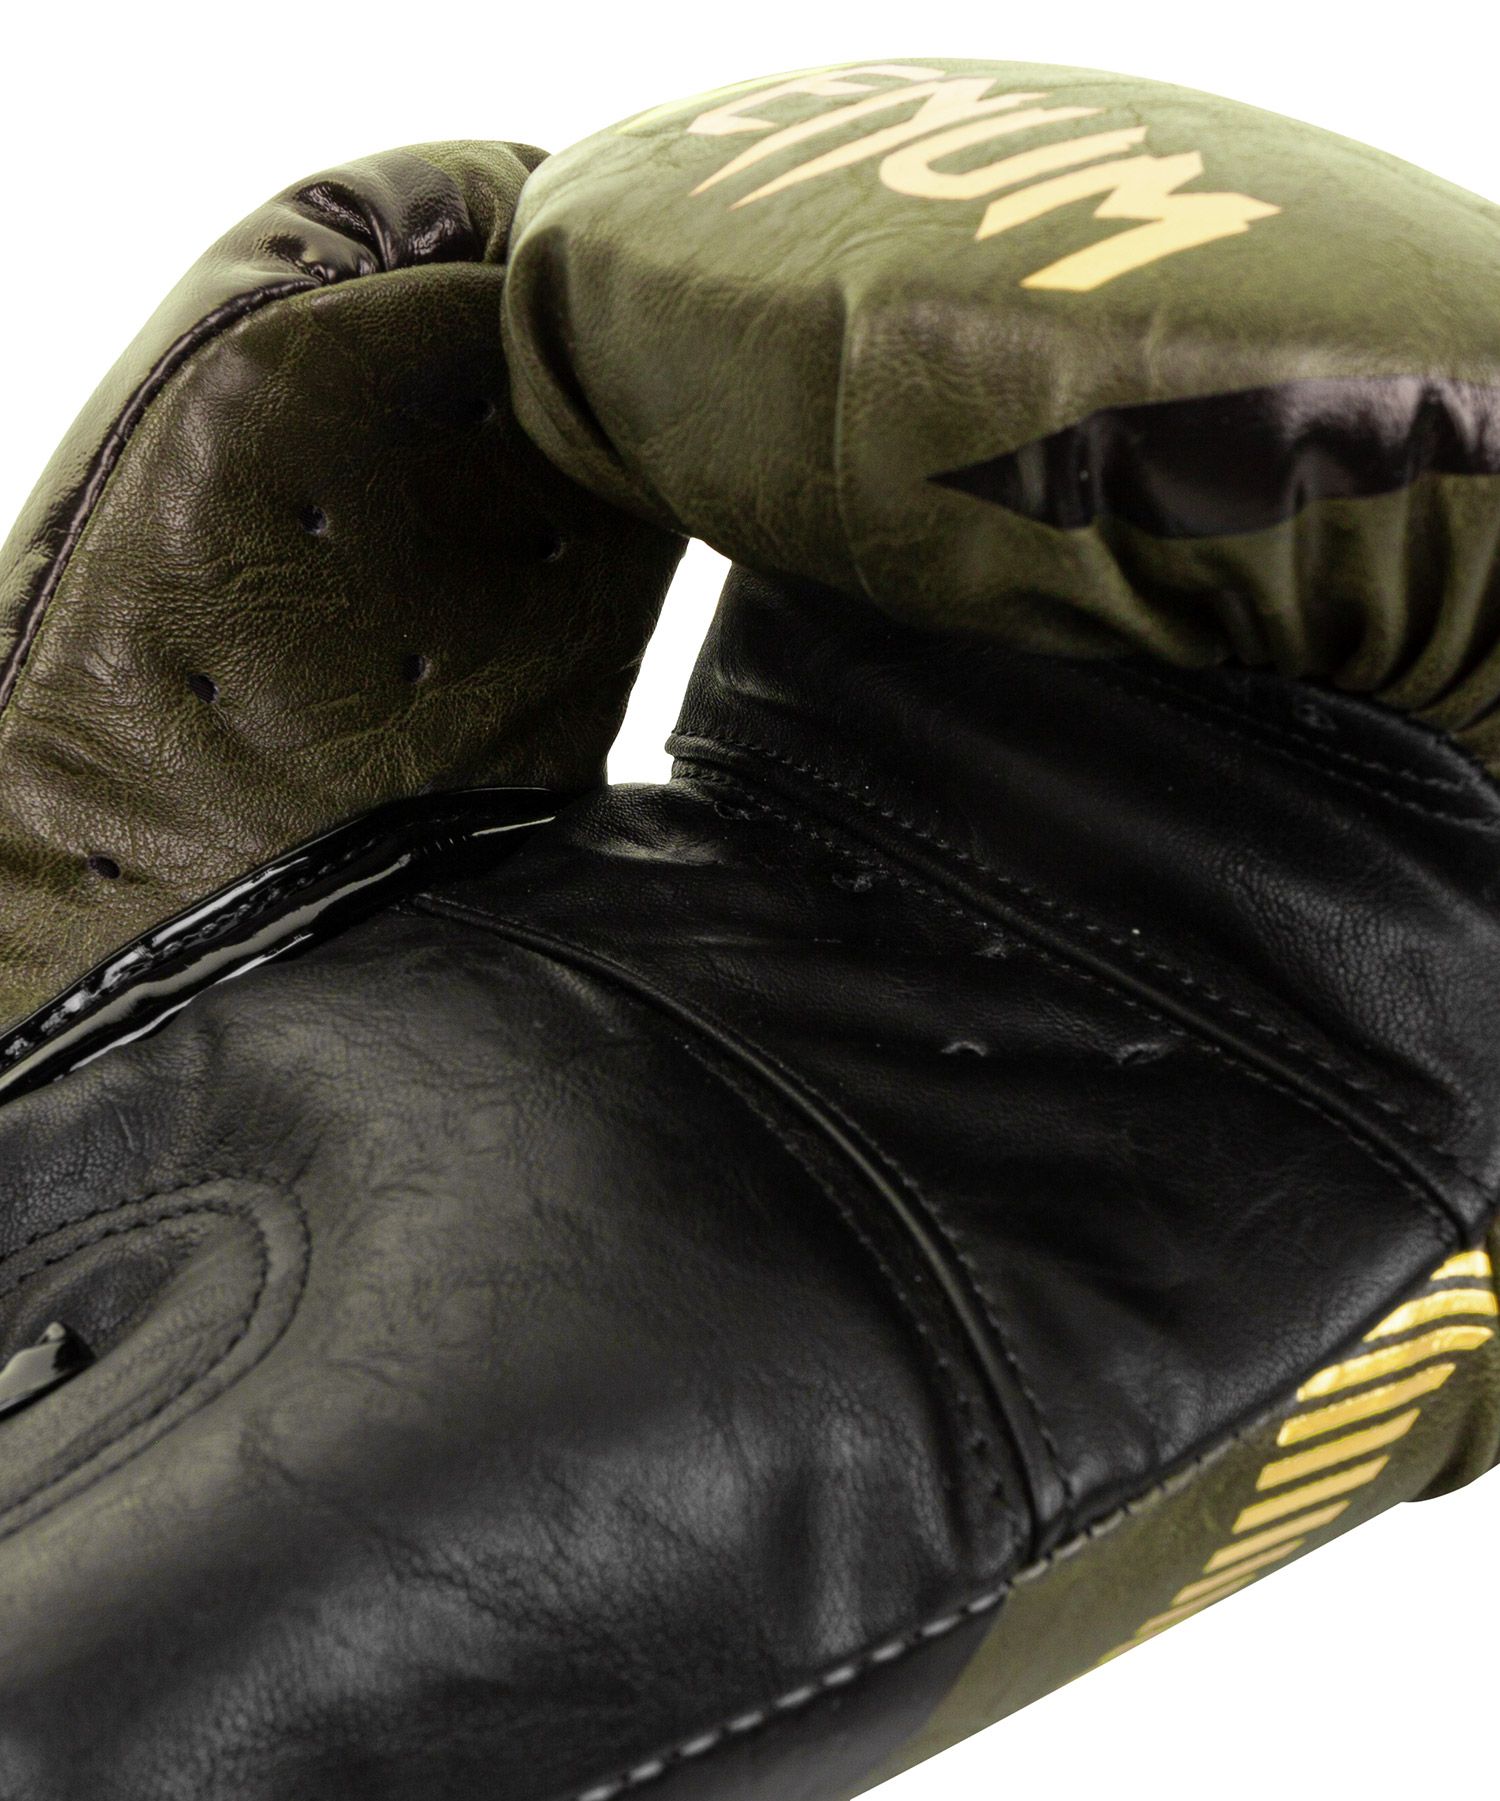 Venum Impact Boxing Gloves - Khaki/Gold - Long Cuff - Budo Online